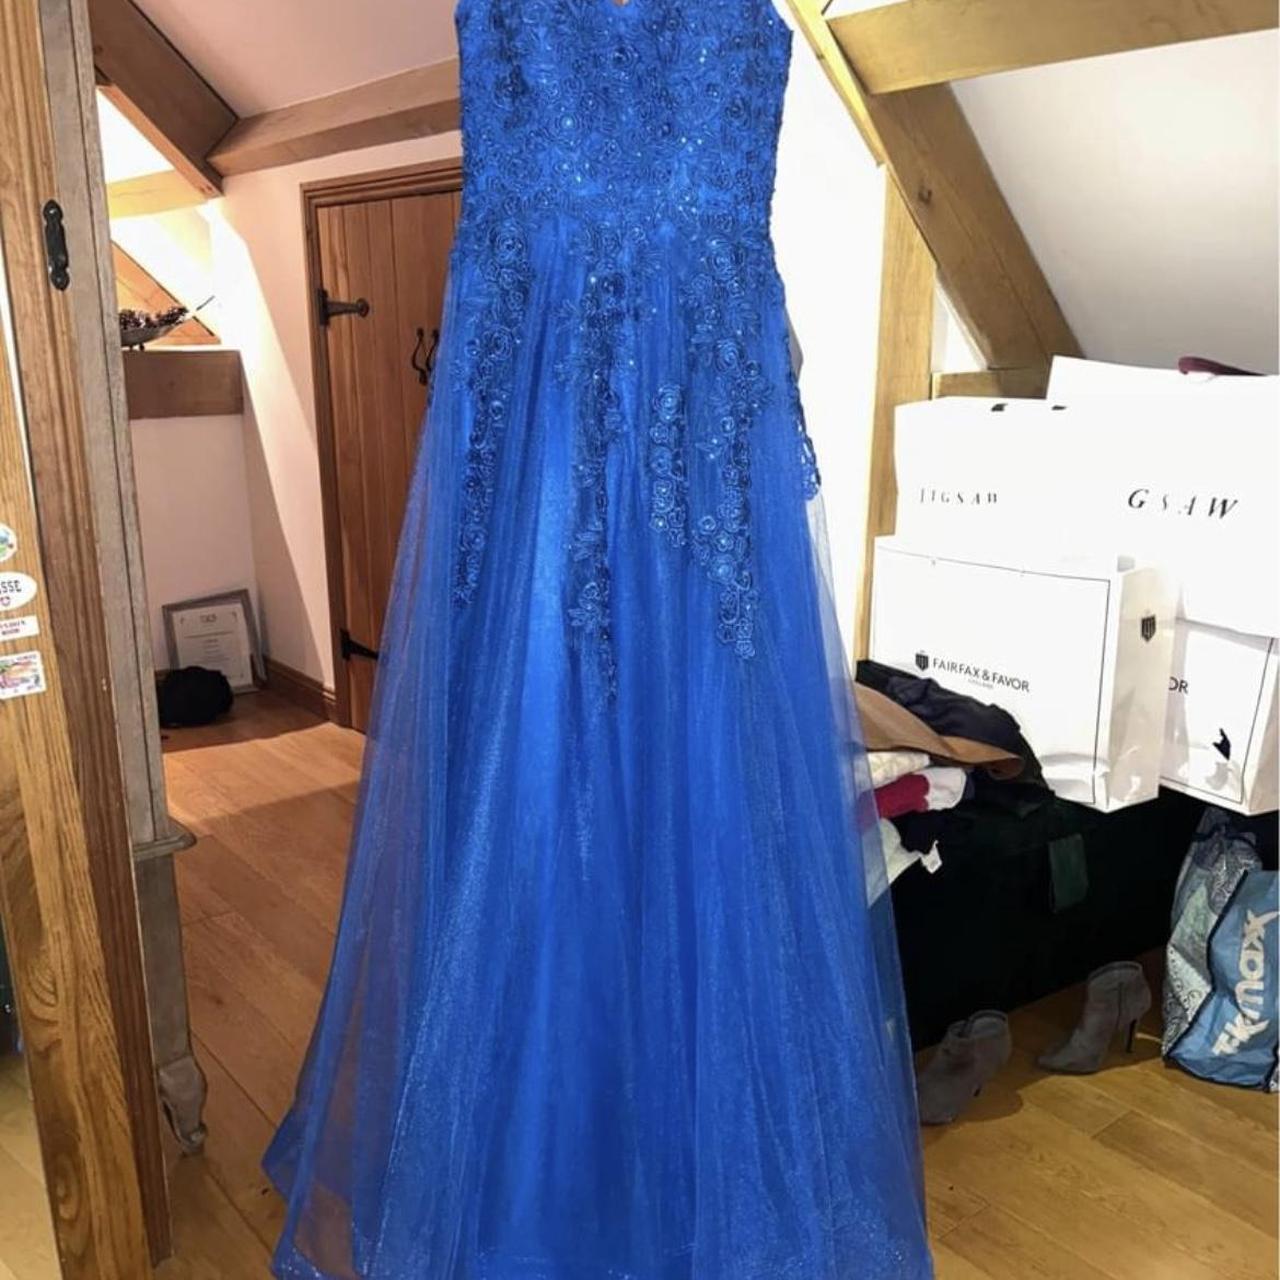 Blue prom dress 💙 worn for 4 hours built in bra... - Depop